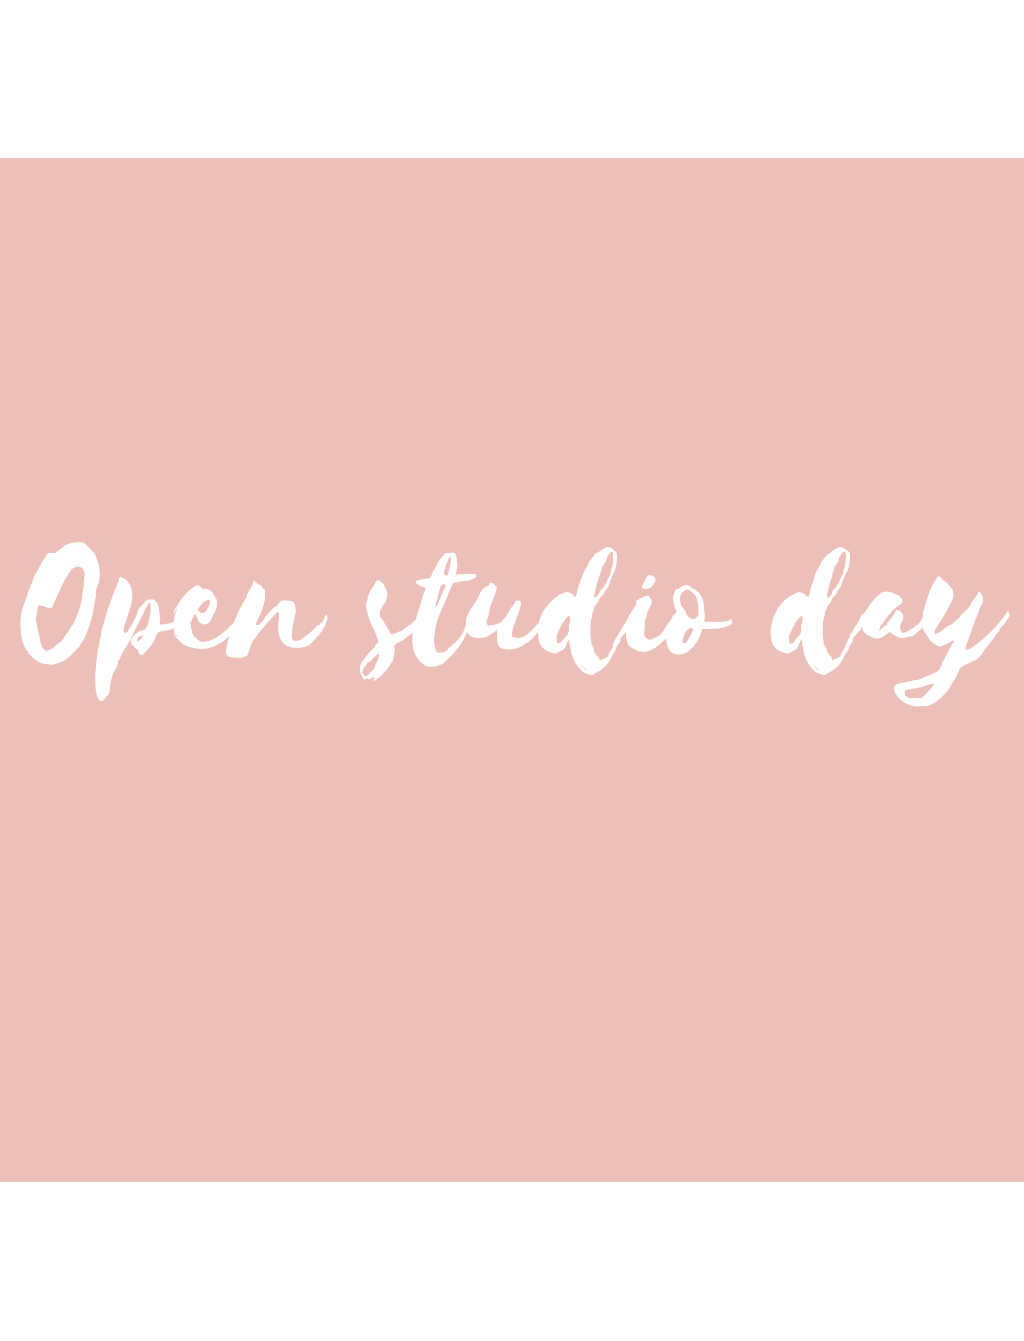 Open studio day 1:30-2:00